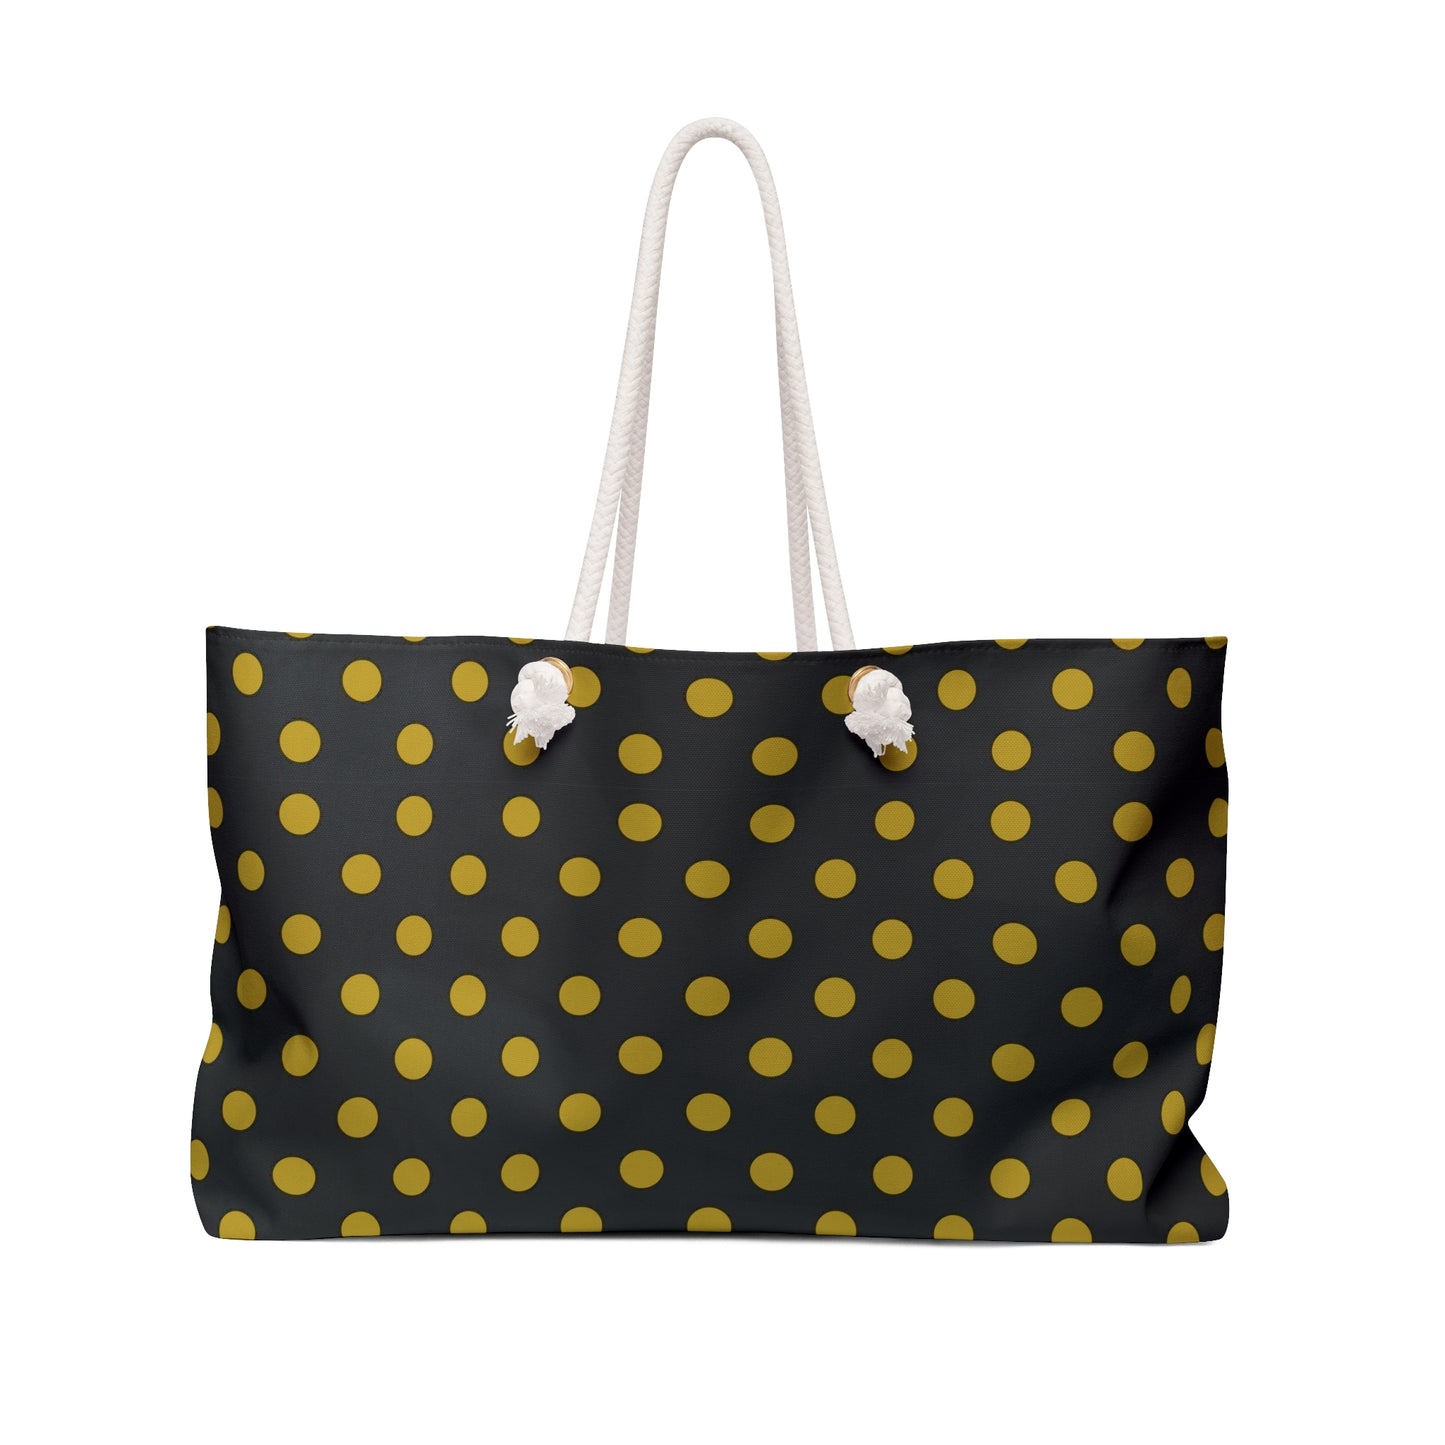 Black and Gold Polka Dot Weekender Bag